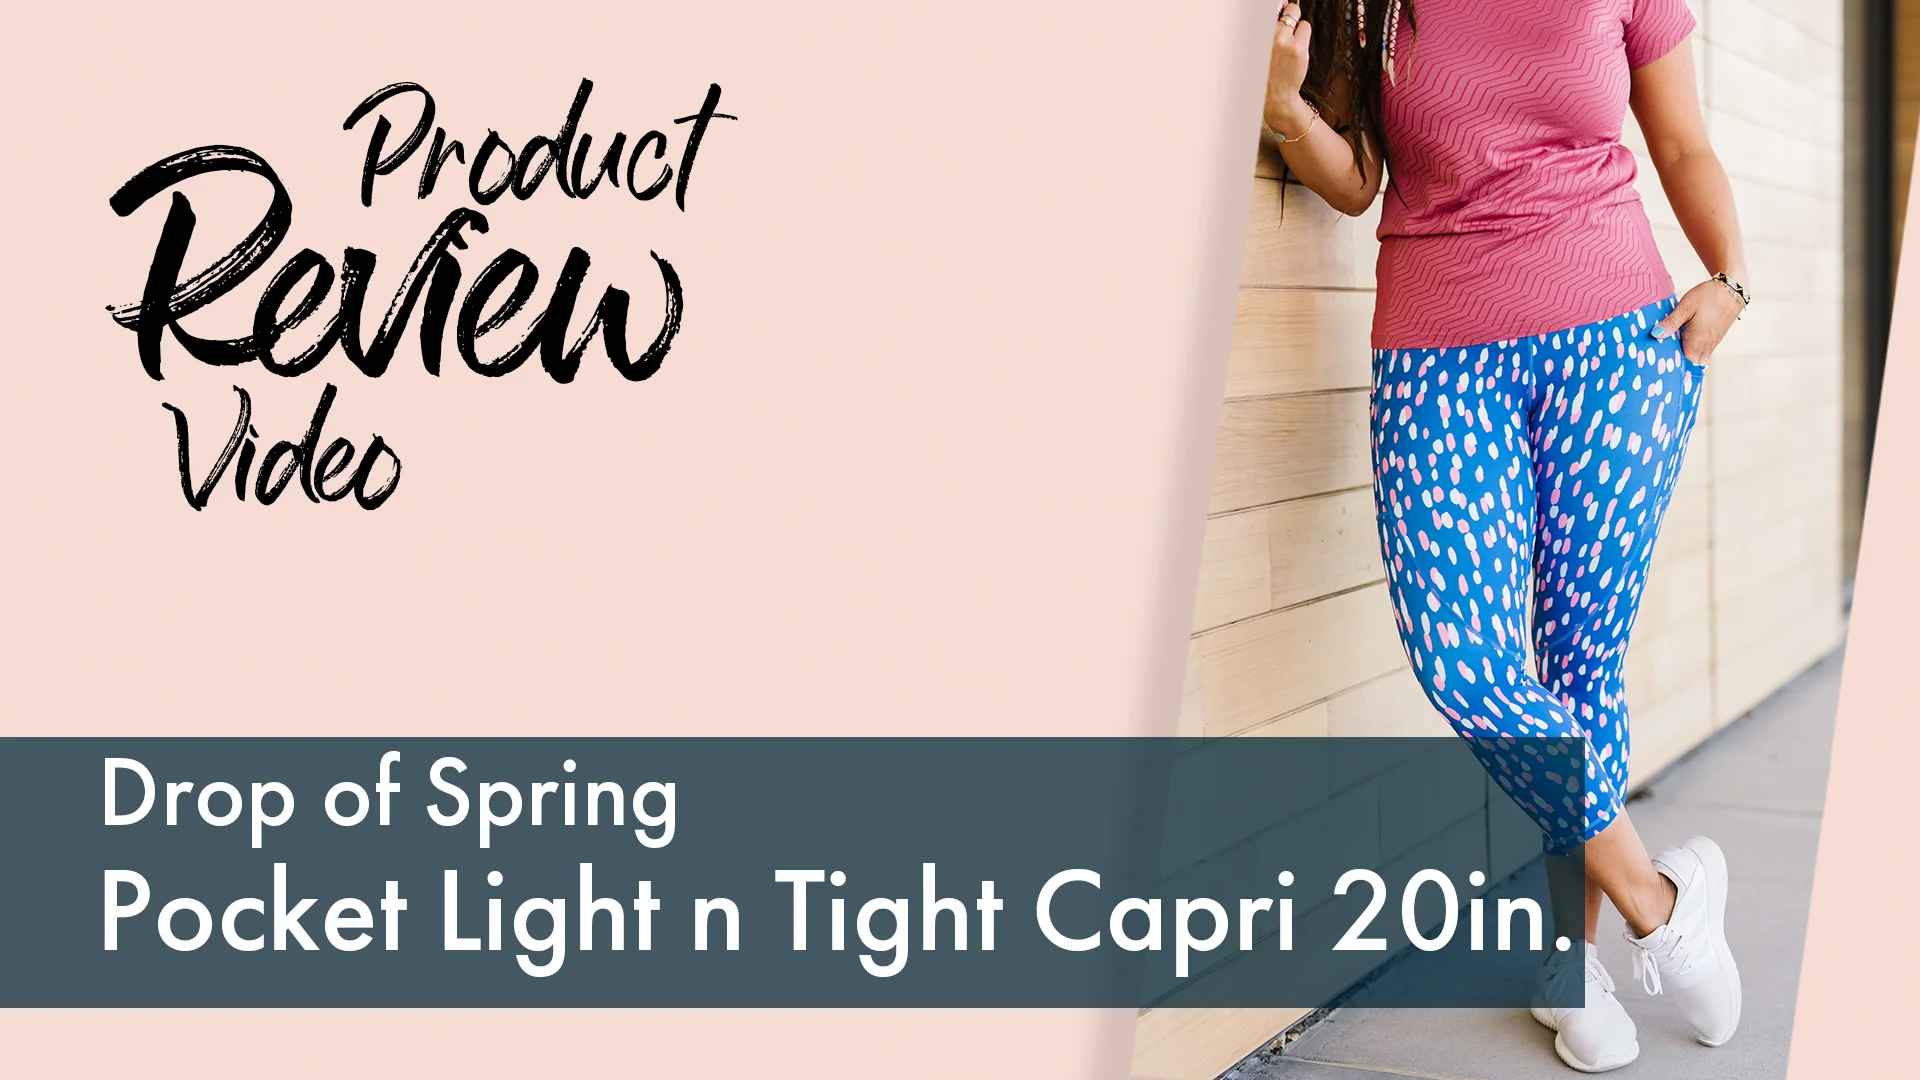 Zyia Active Drop Of Spring Pocket Light n Tight Capri 20 #1280 on Vimeo